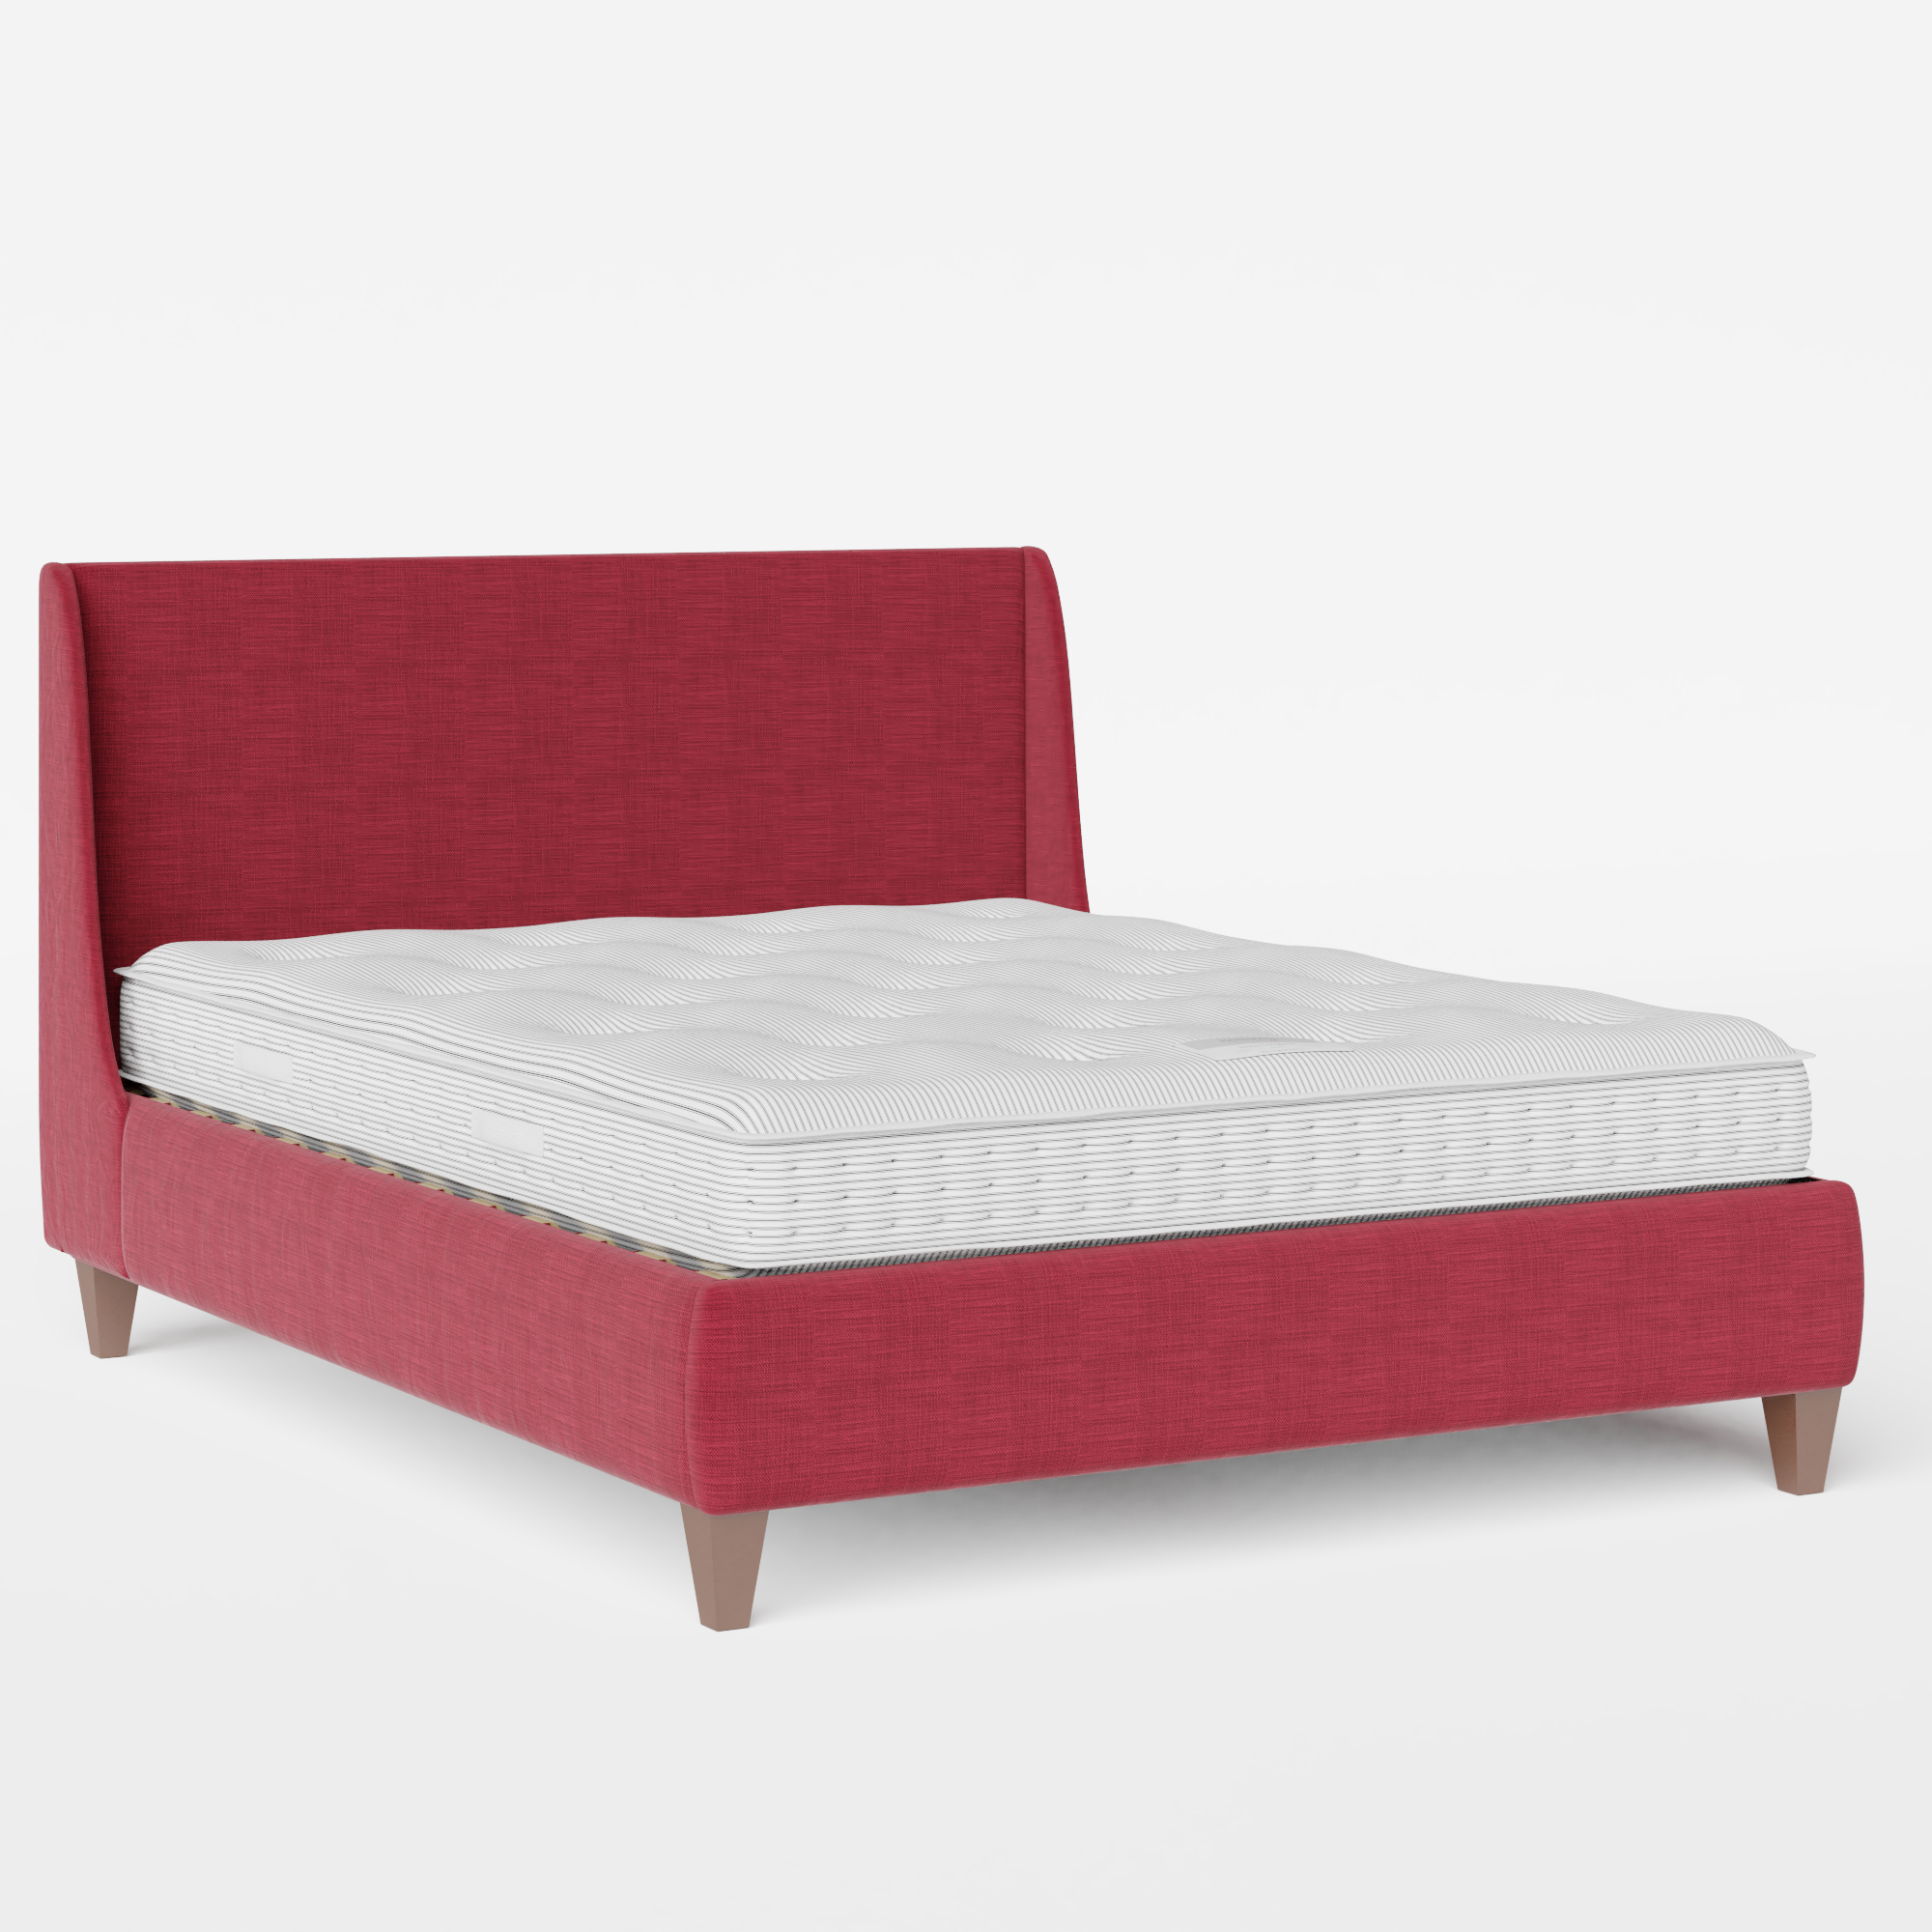 Sunderland upholstered bed in cherry fabric